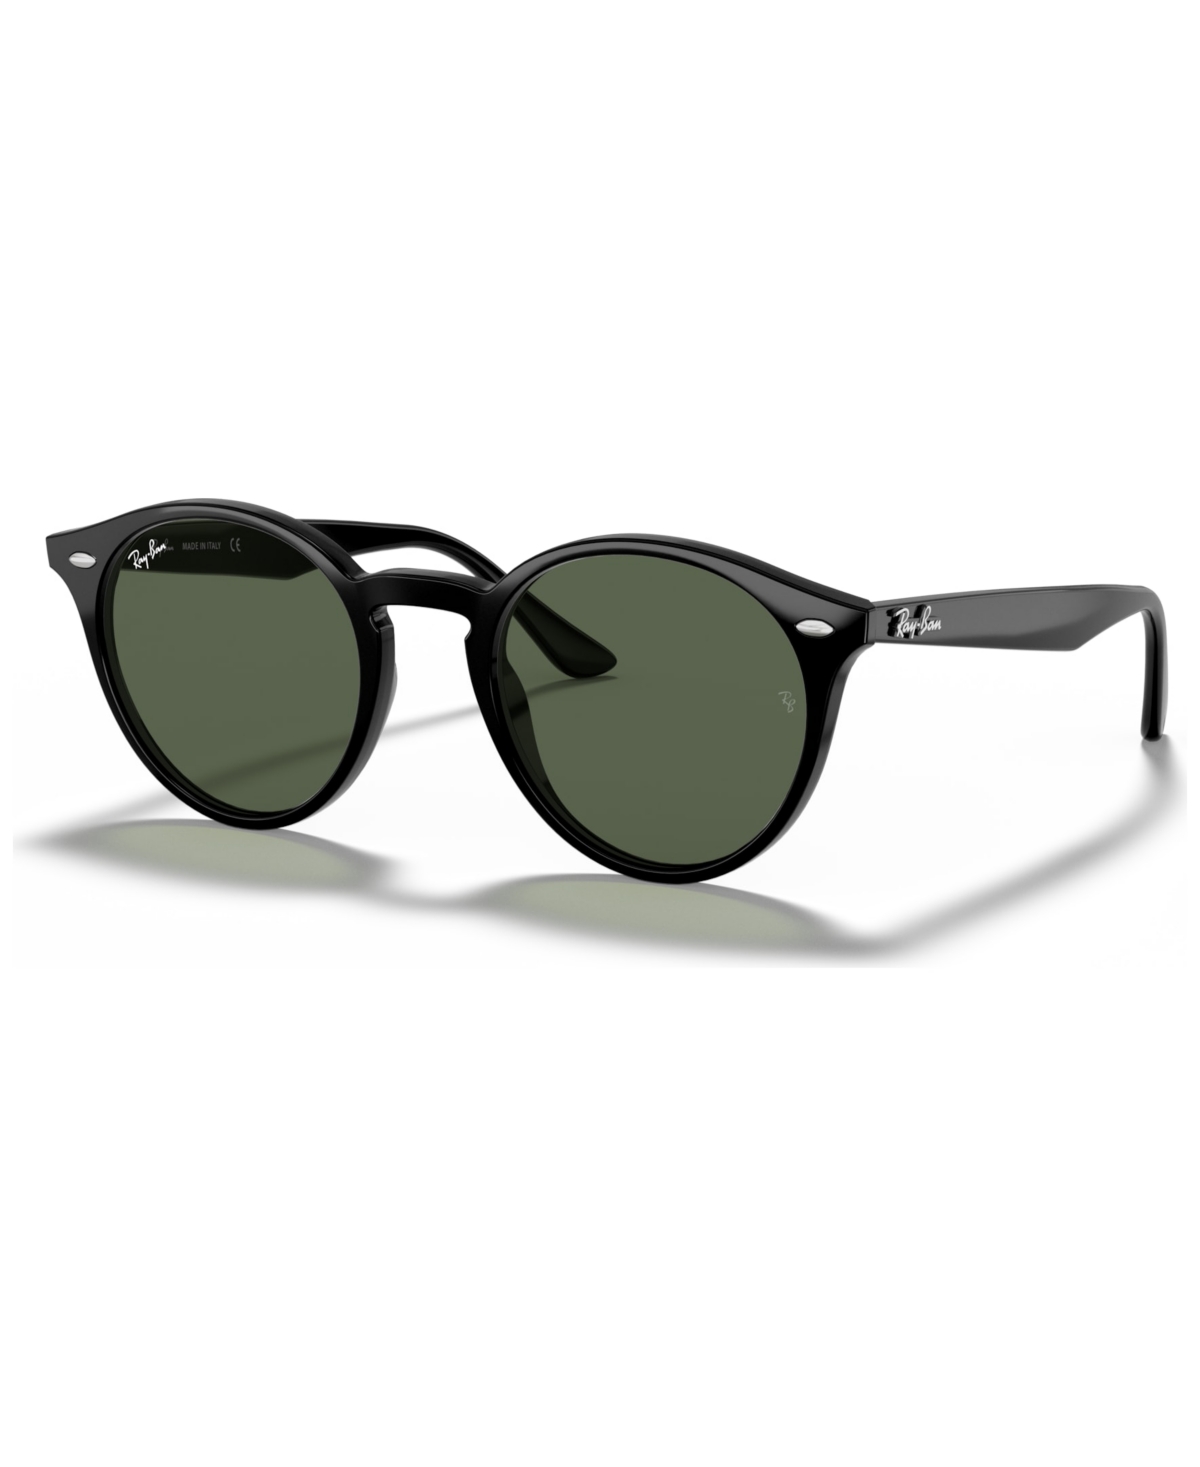 Ray-Ban Sunglasses, RB2180 & Reviews - Sunglasses by Sunglass Hut -  Handbags & Accessories - Macy's